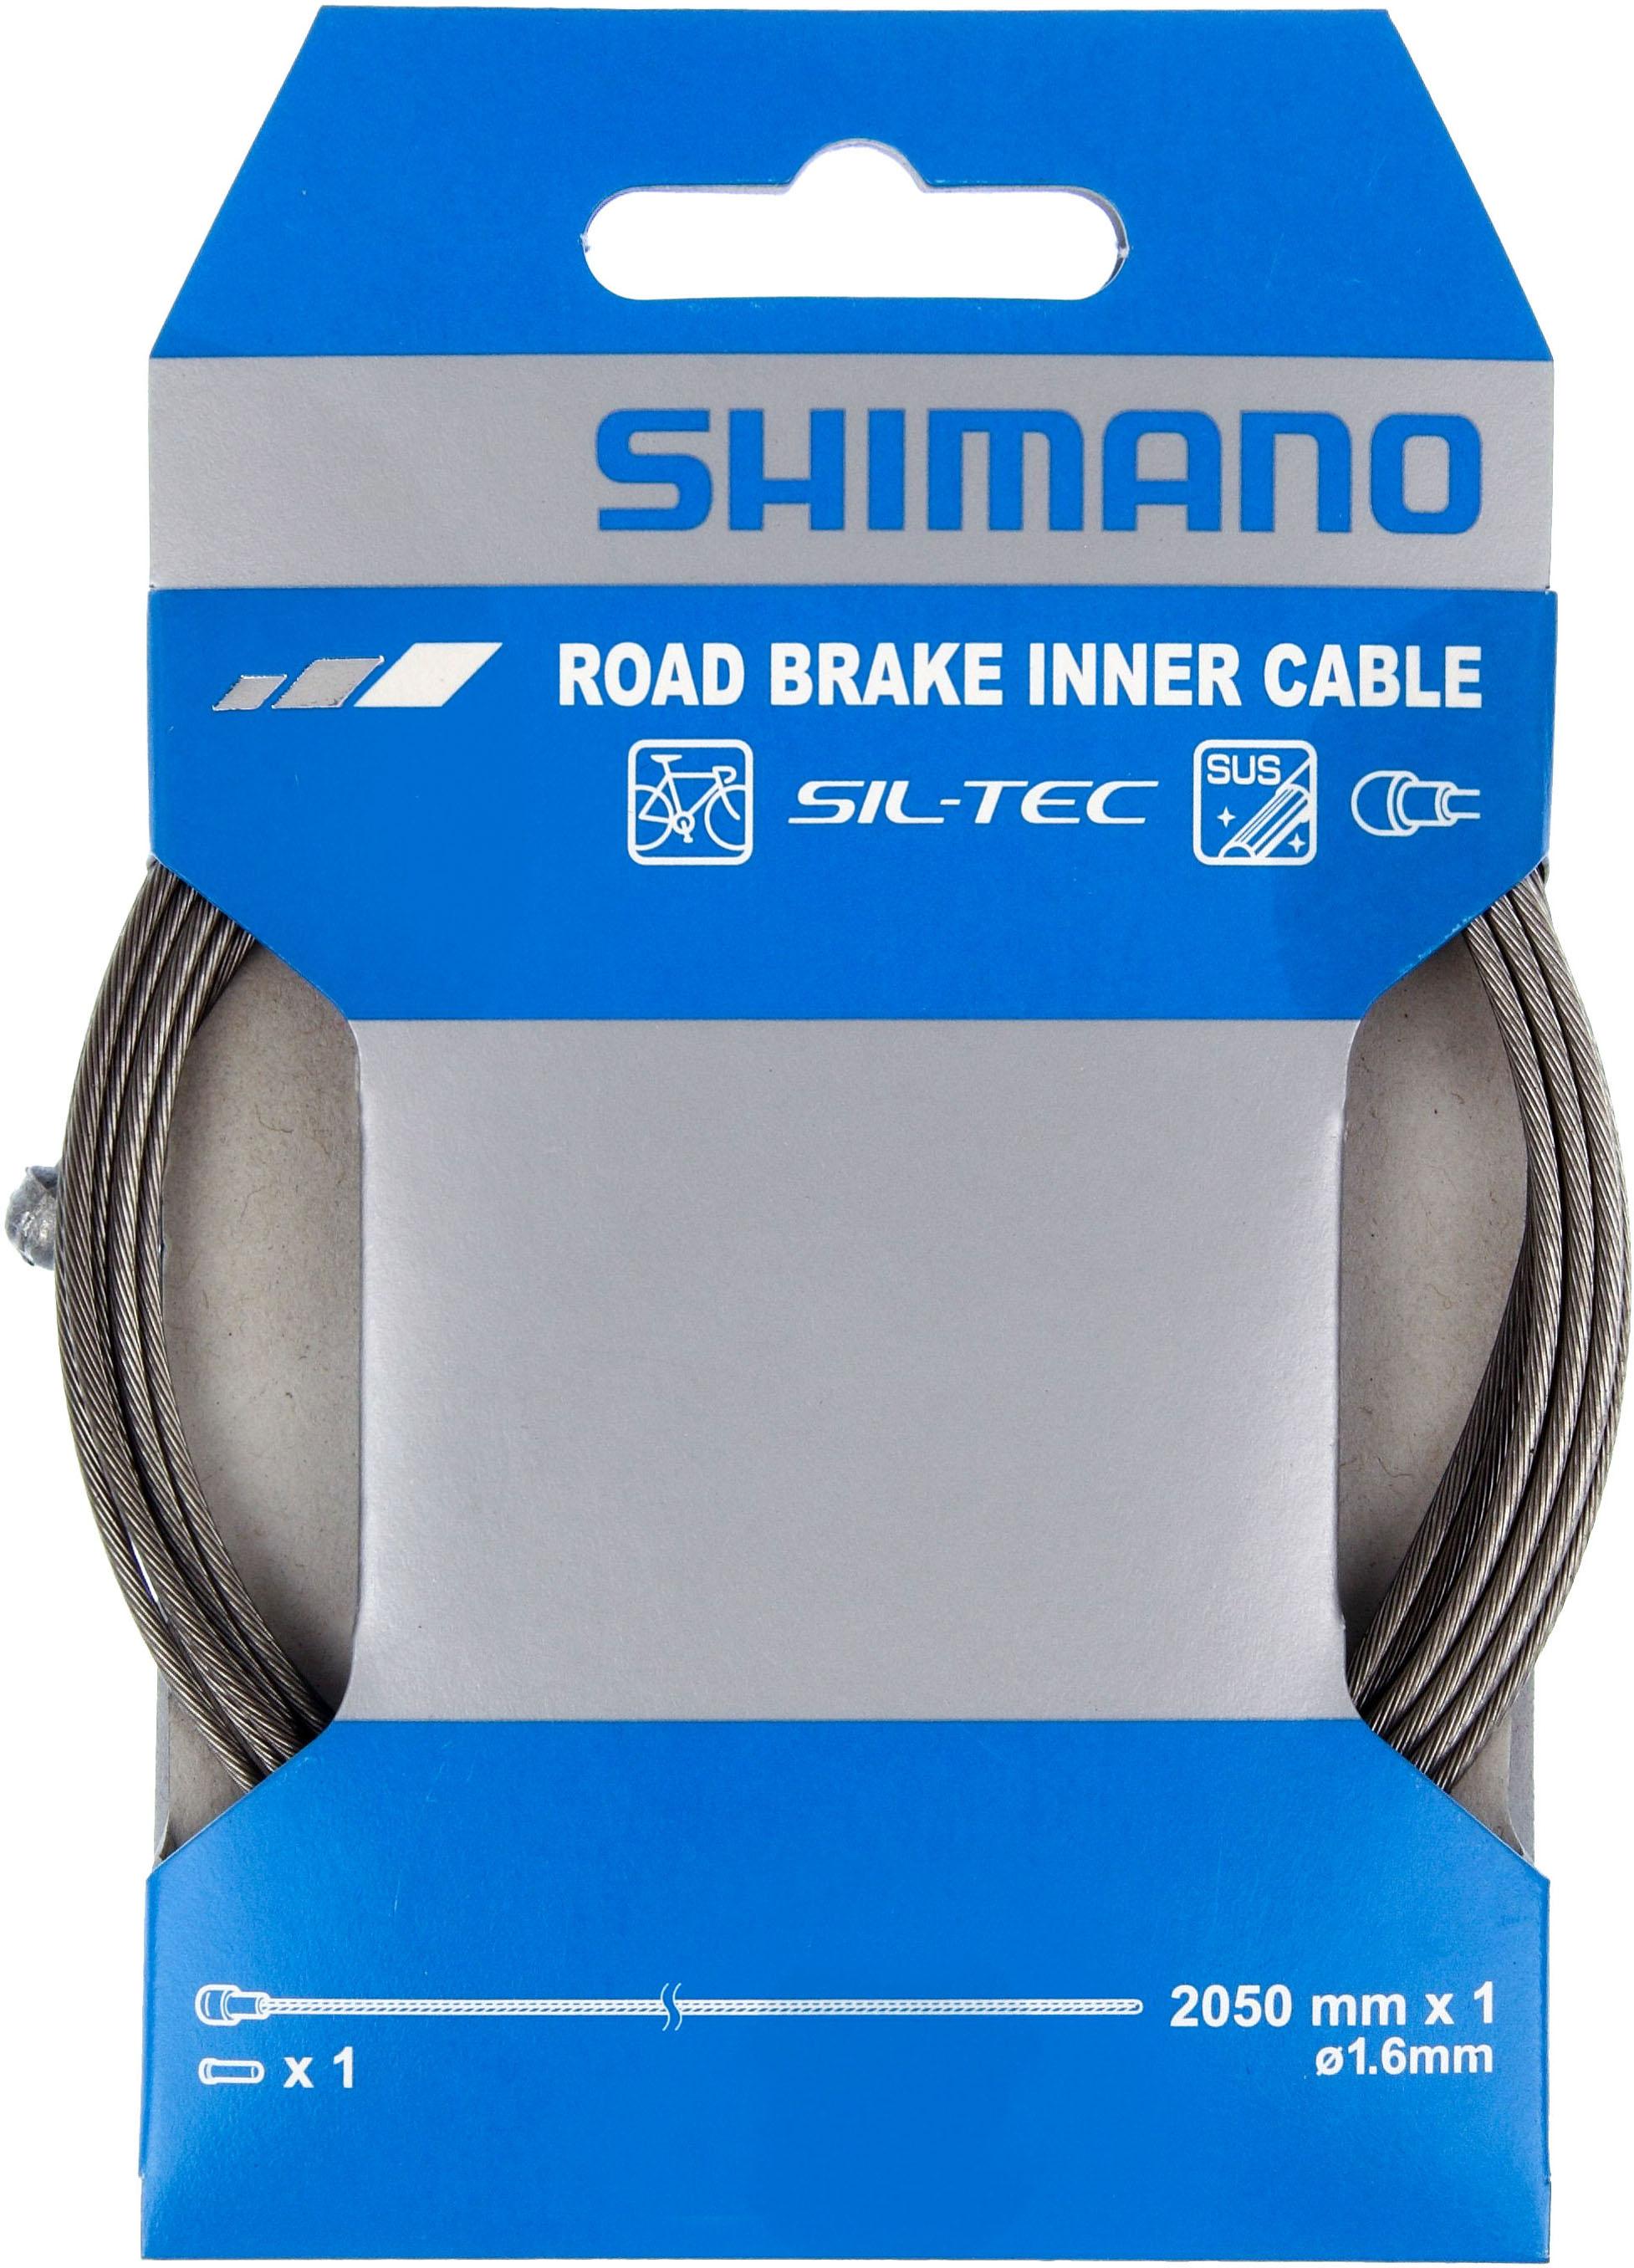 Shimano Sil-tec Road Bike Brake Cable  Silver